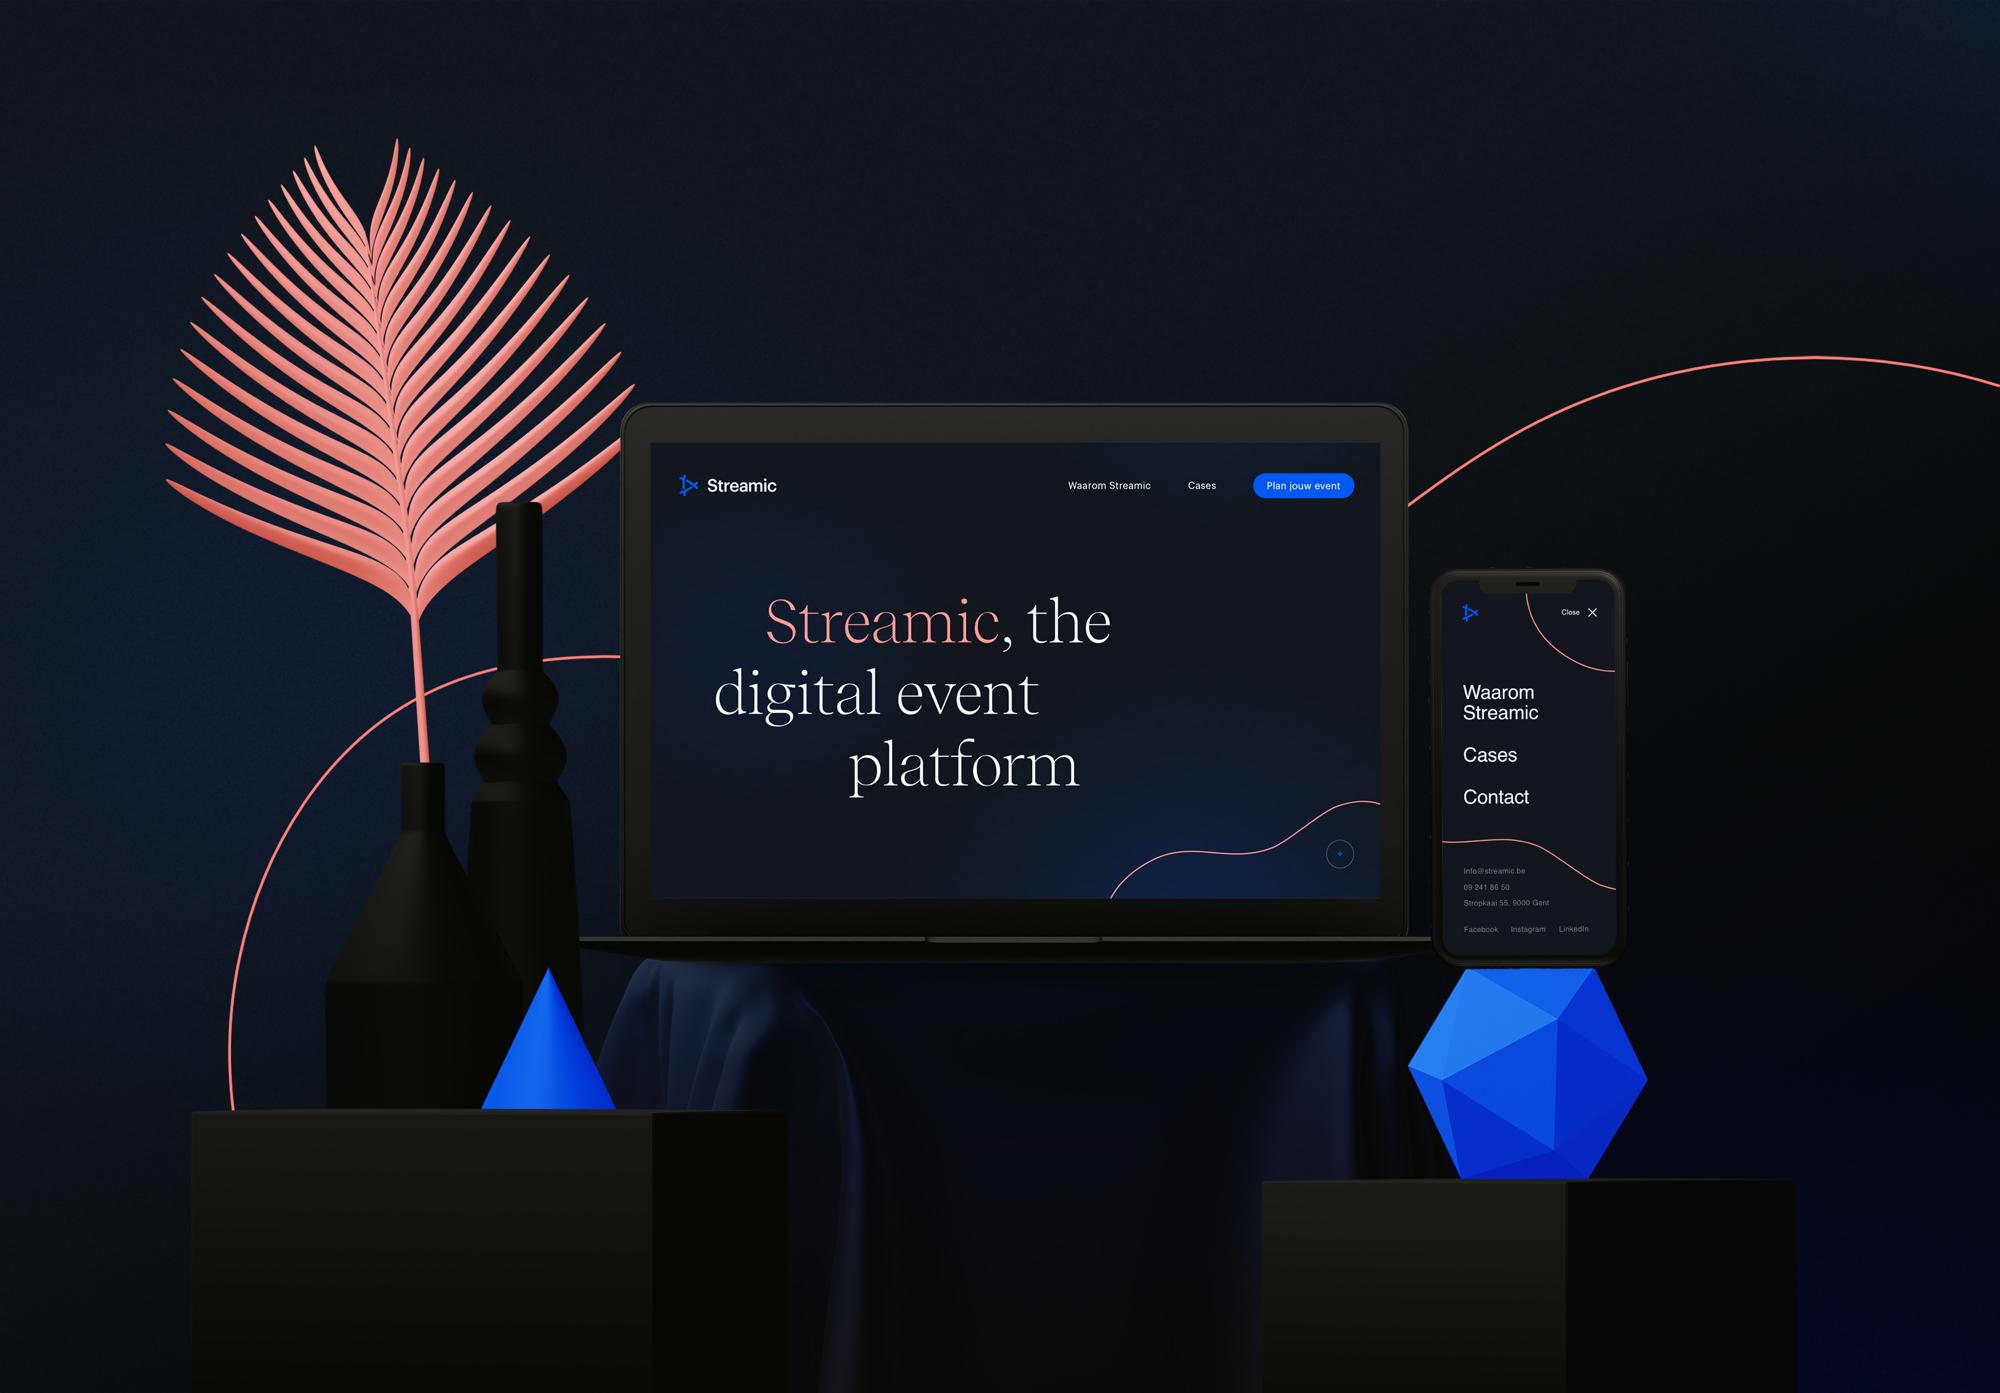 Streamic, the digital event platform